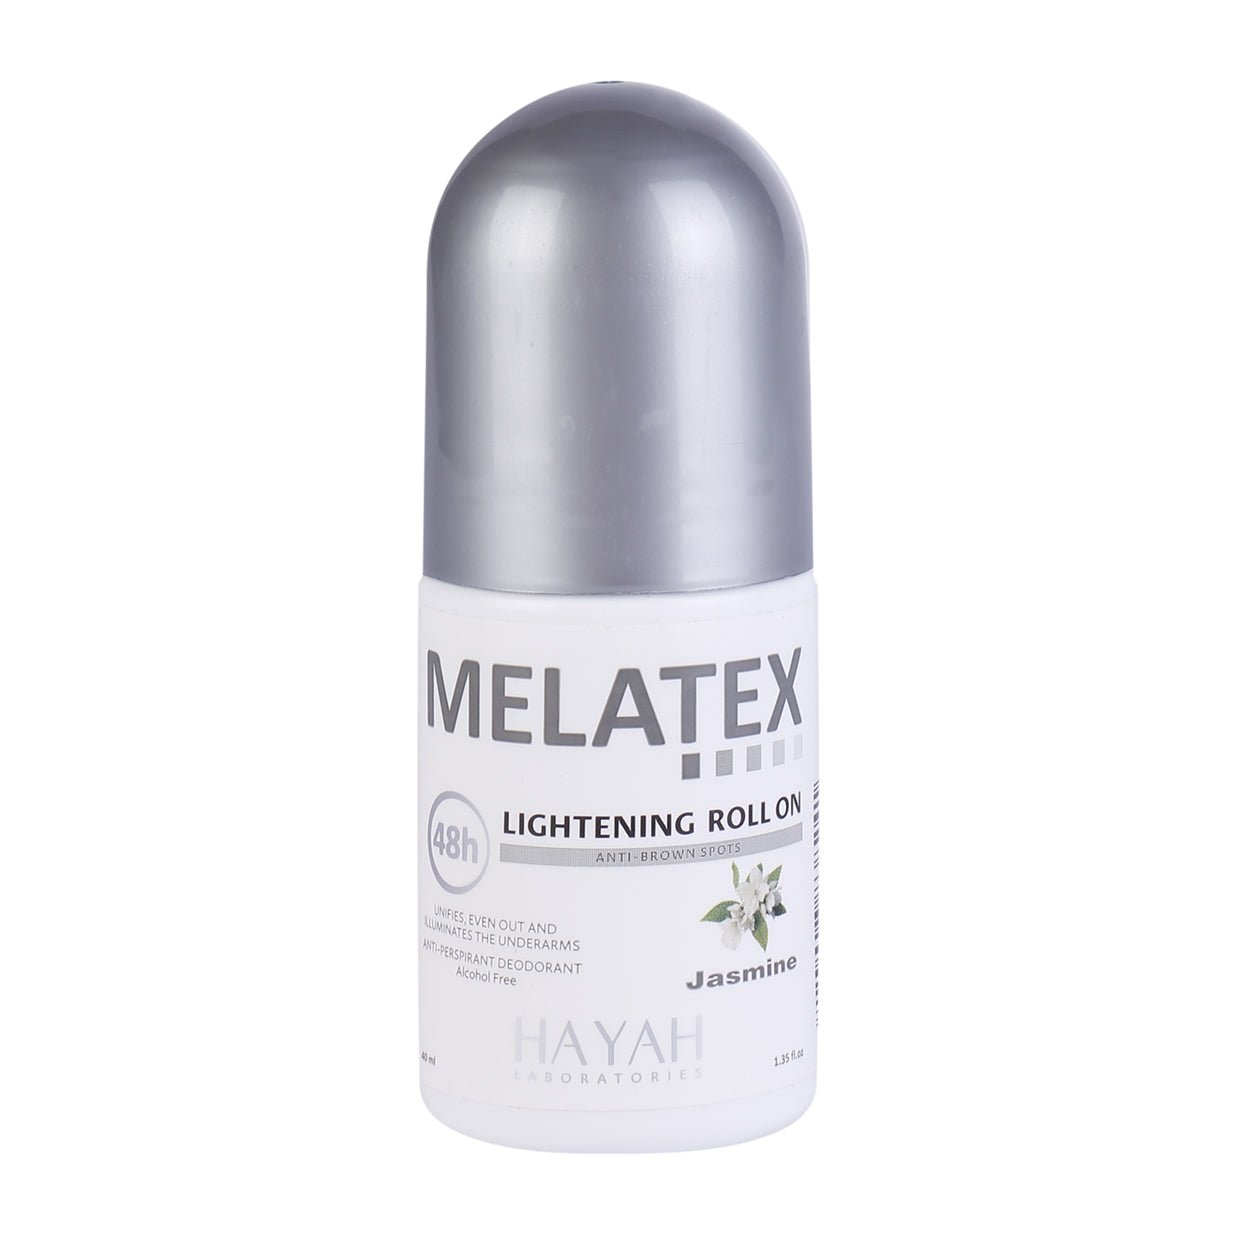 Hayah Melatex Jasmine Lightening Roll On Deodorant - 40ml - Bloom Pharmacy